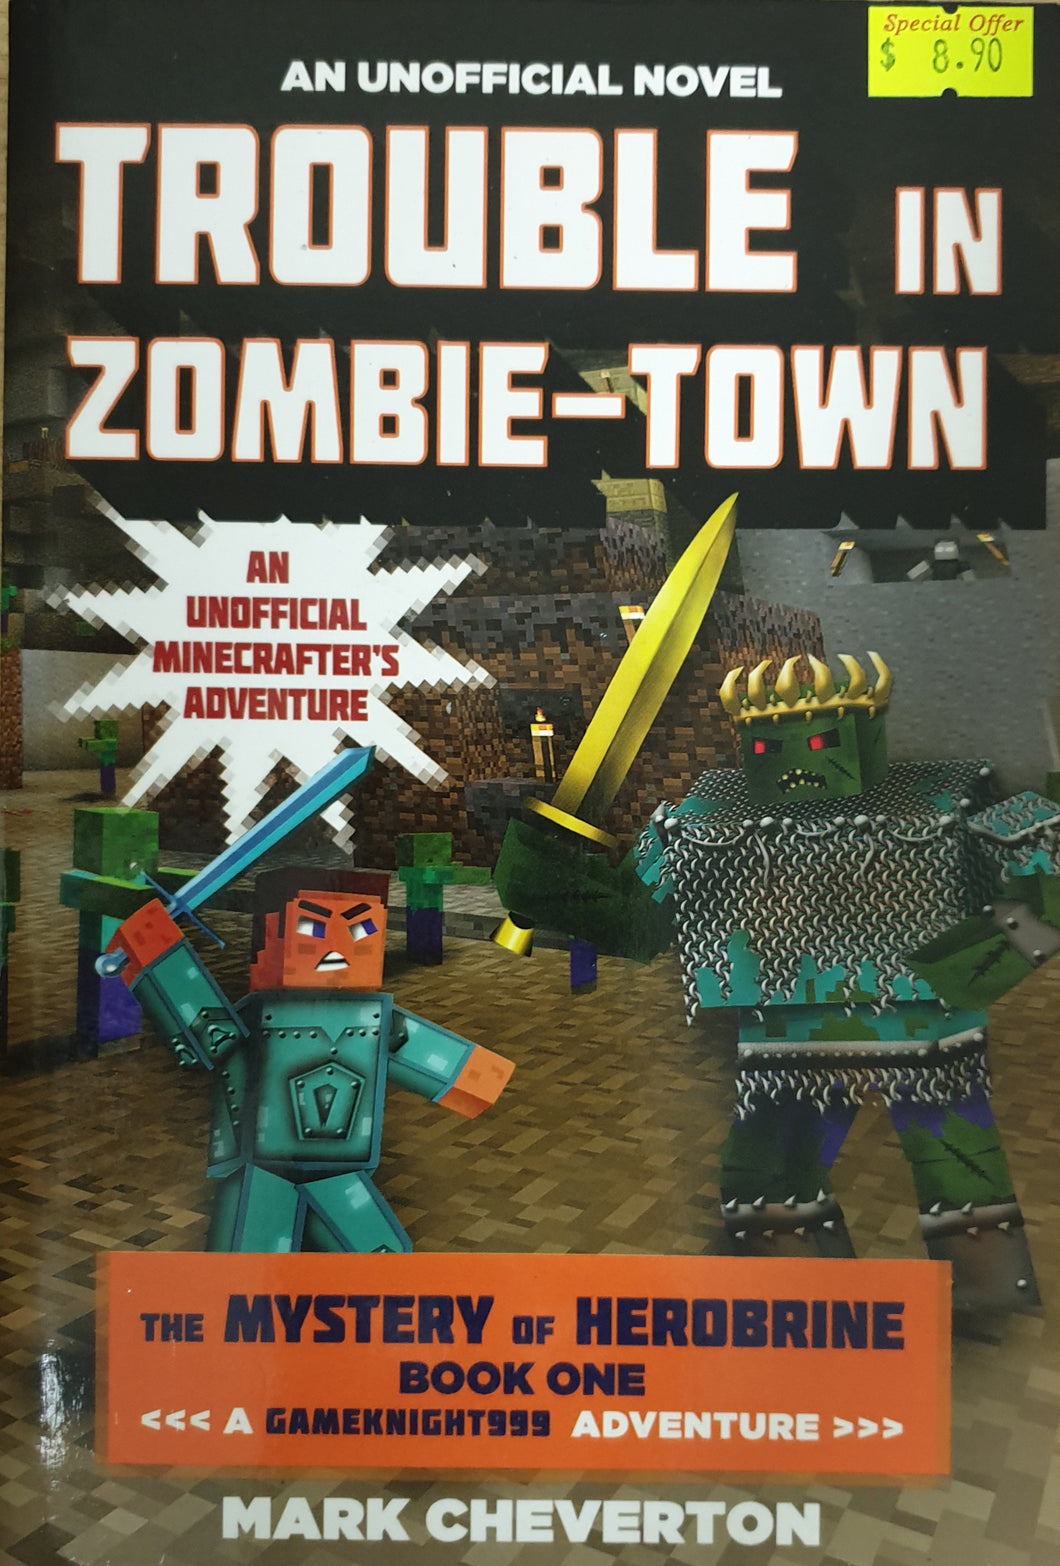 Trouble in Zombie-town - Mark Cheveton